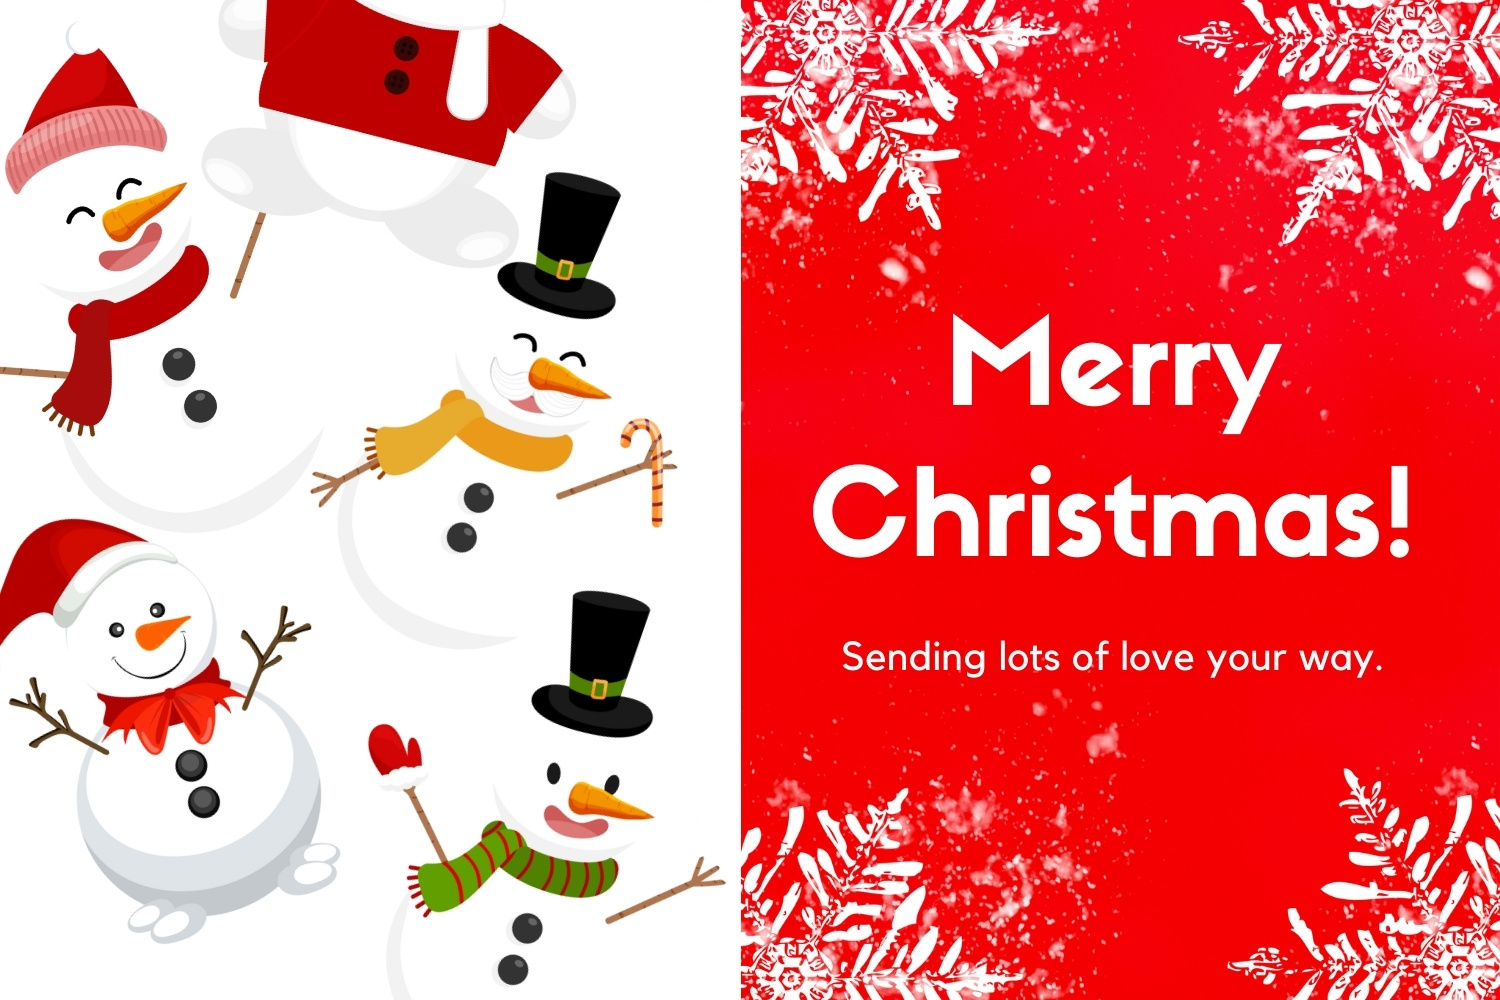 15 Christmas Snowman Cliparts facebook image.